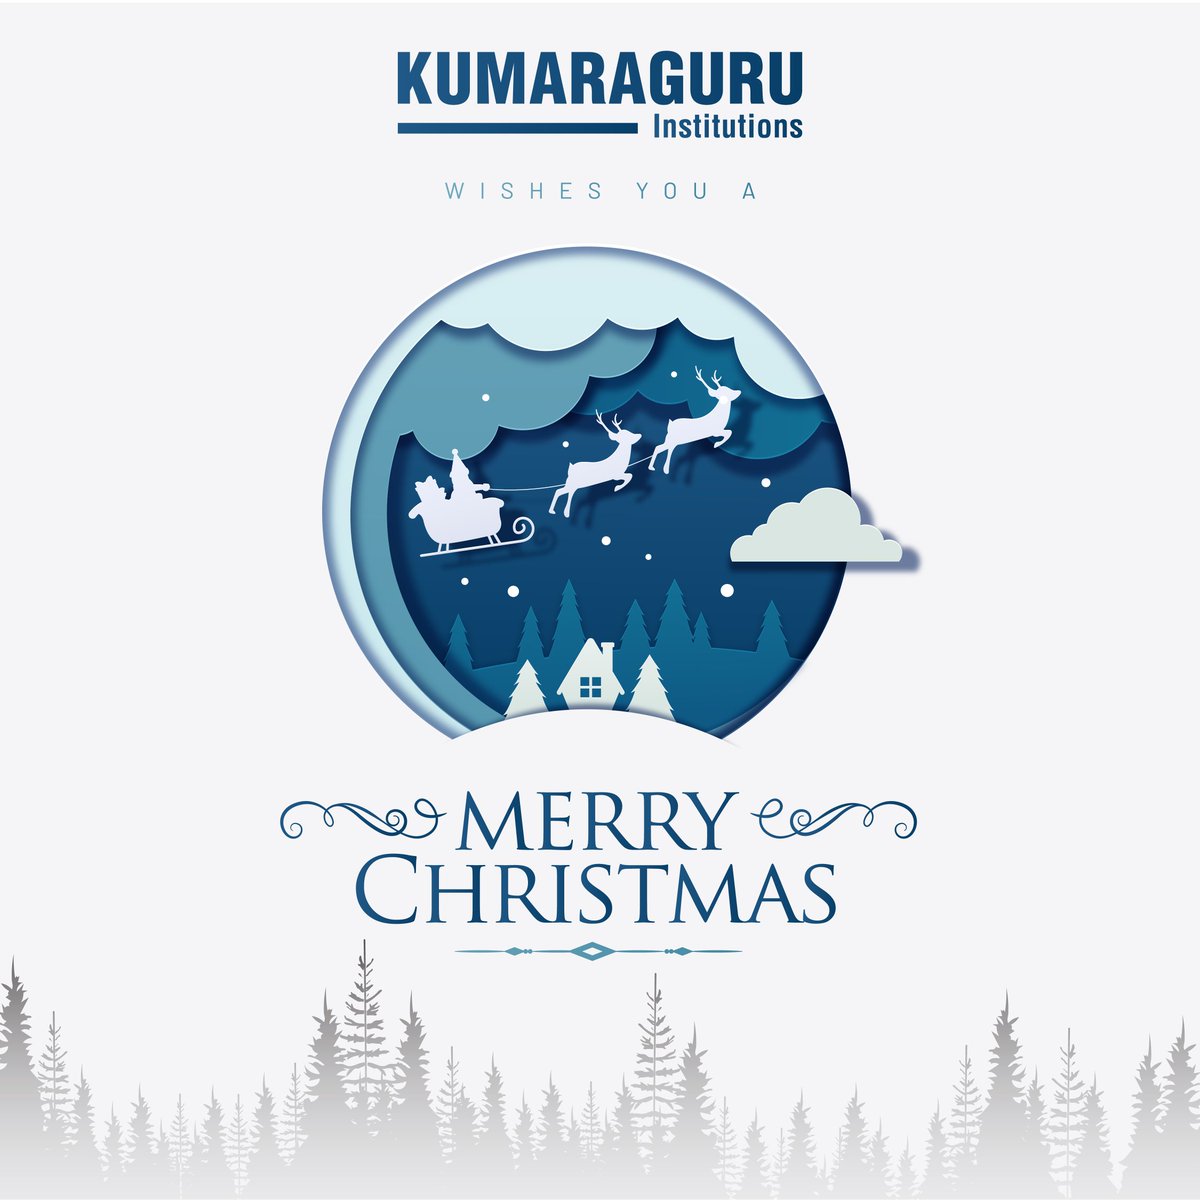 May the spirit of Christmas brings you peace and joy. #MerryChristmas! from #kumaraguruinstitutions. #KCT #Kumaraguru